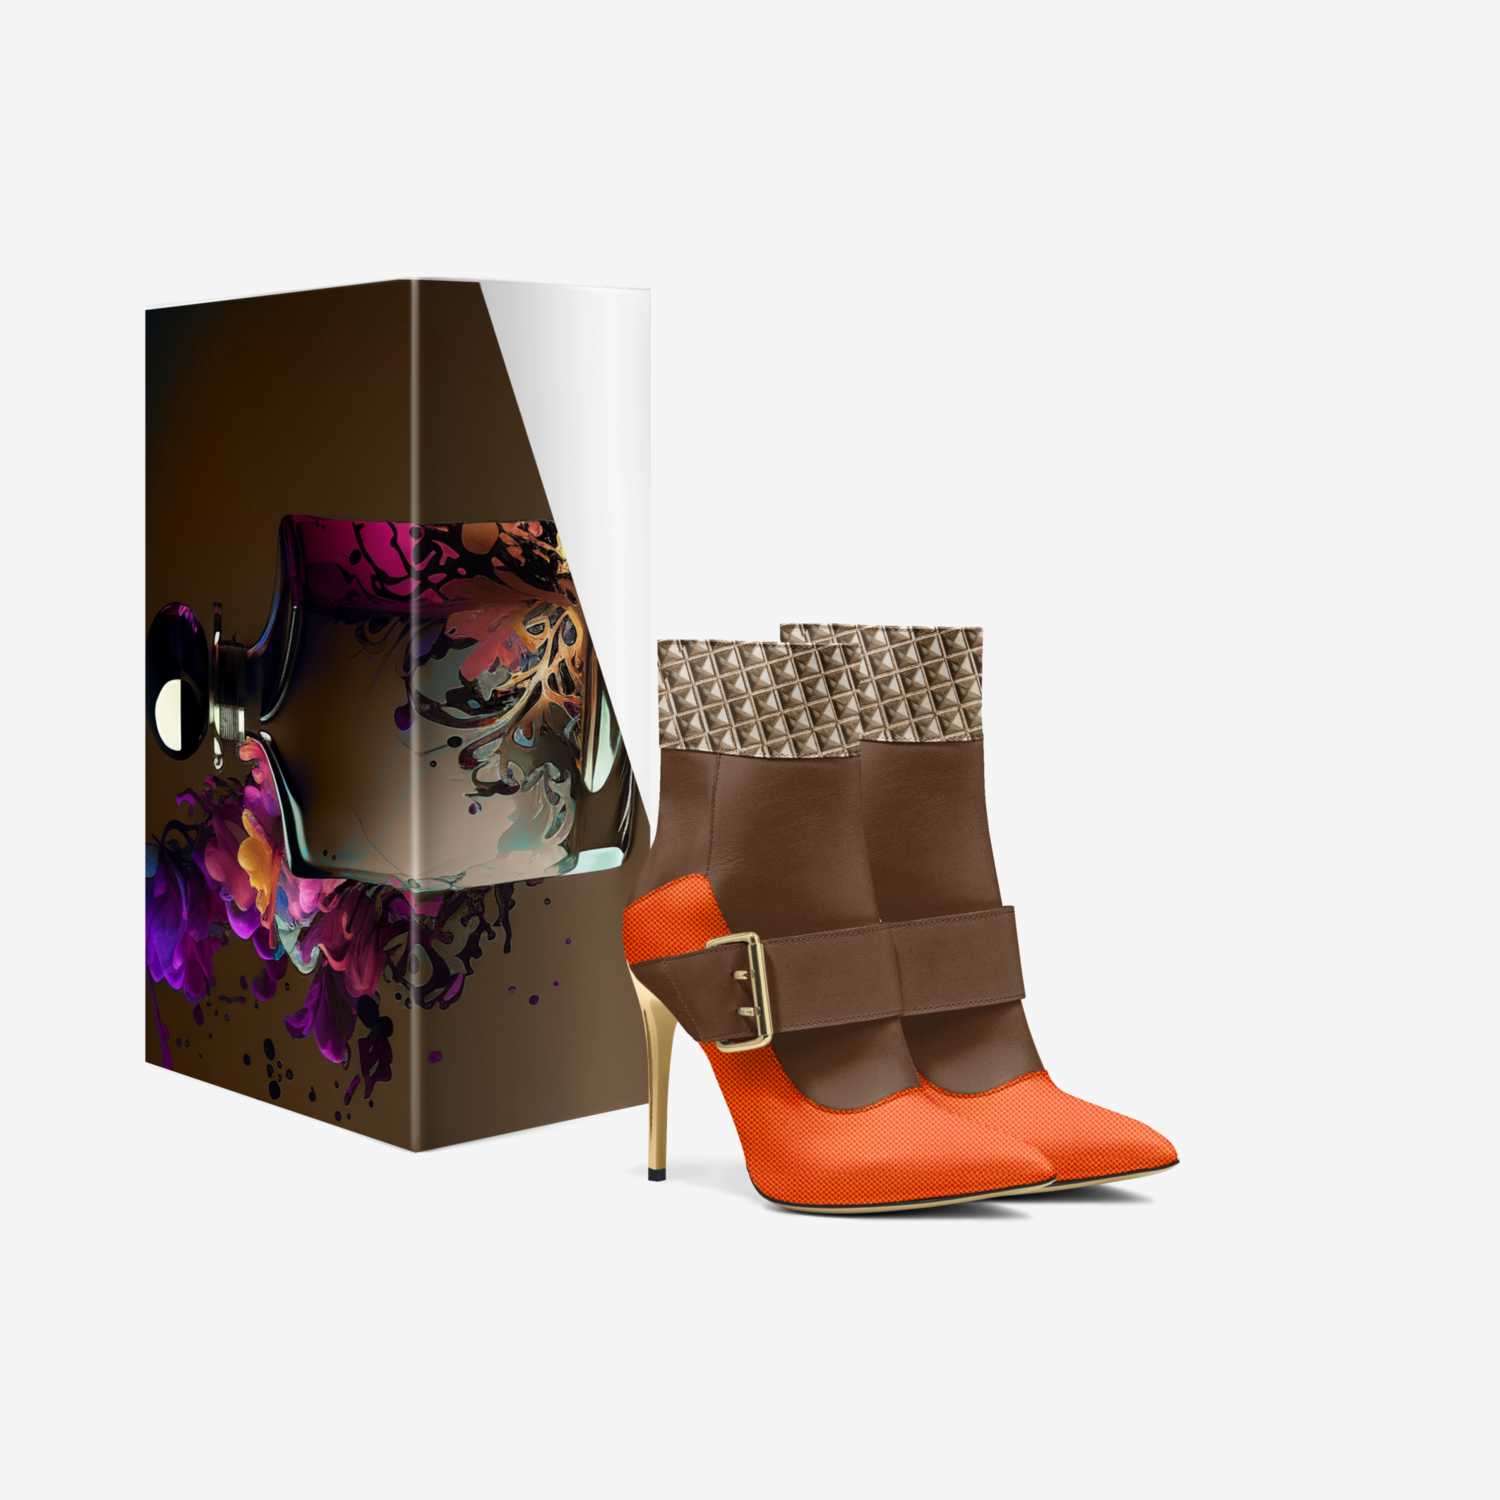 Nalai Dreams custom made in Italy shoes by Jahi Ali-bey | Box view